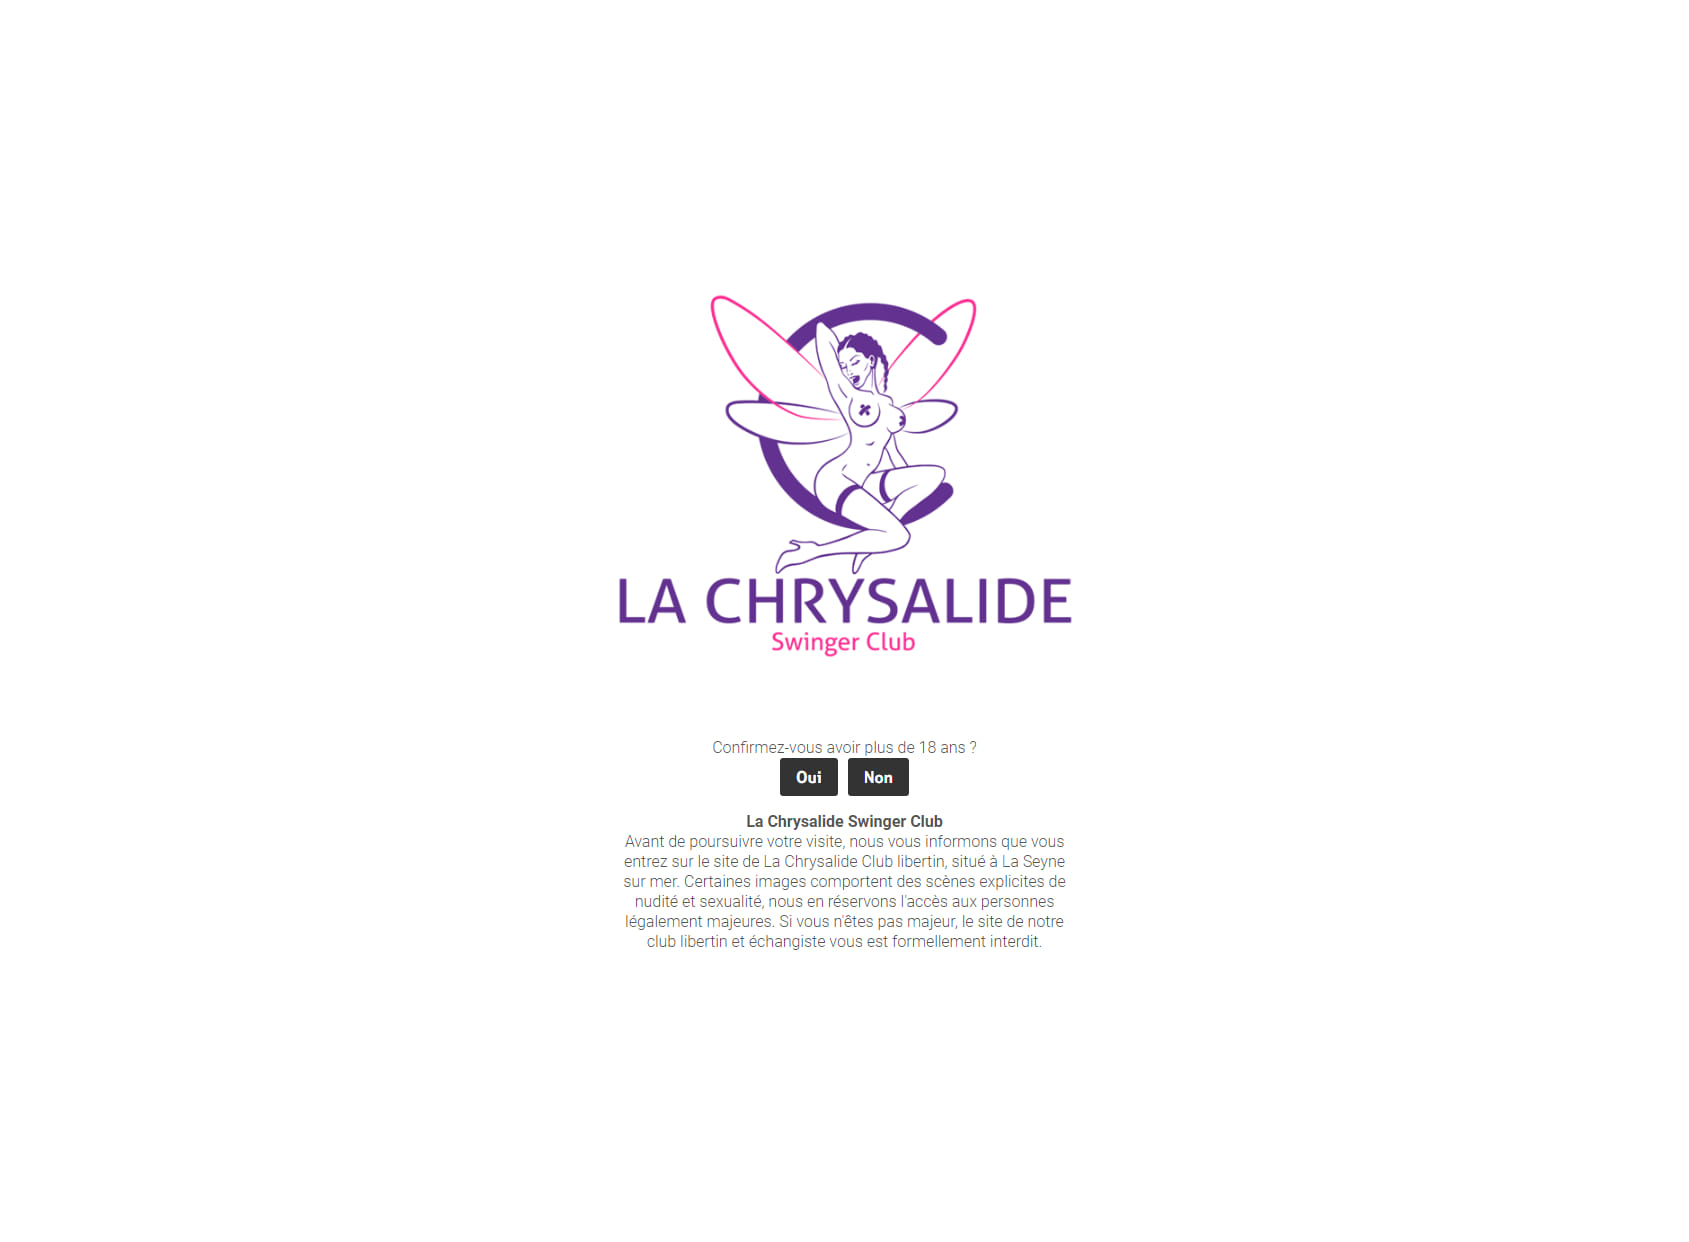 La Chrysalide club